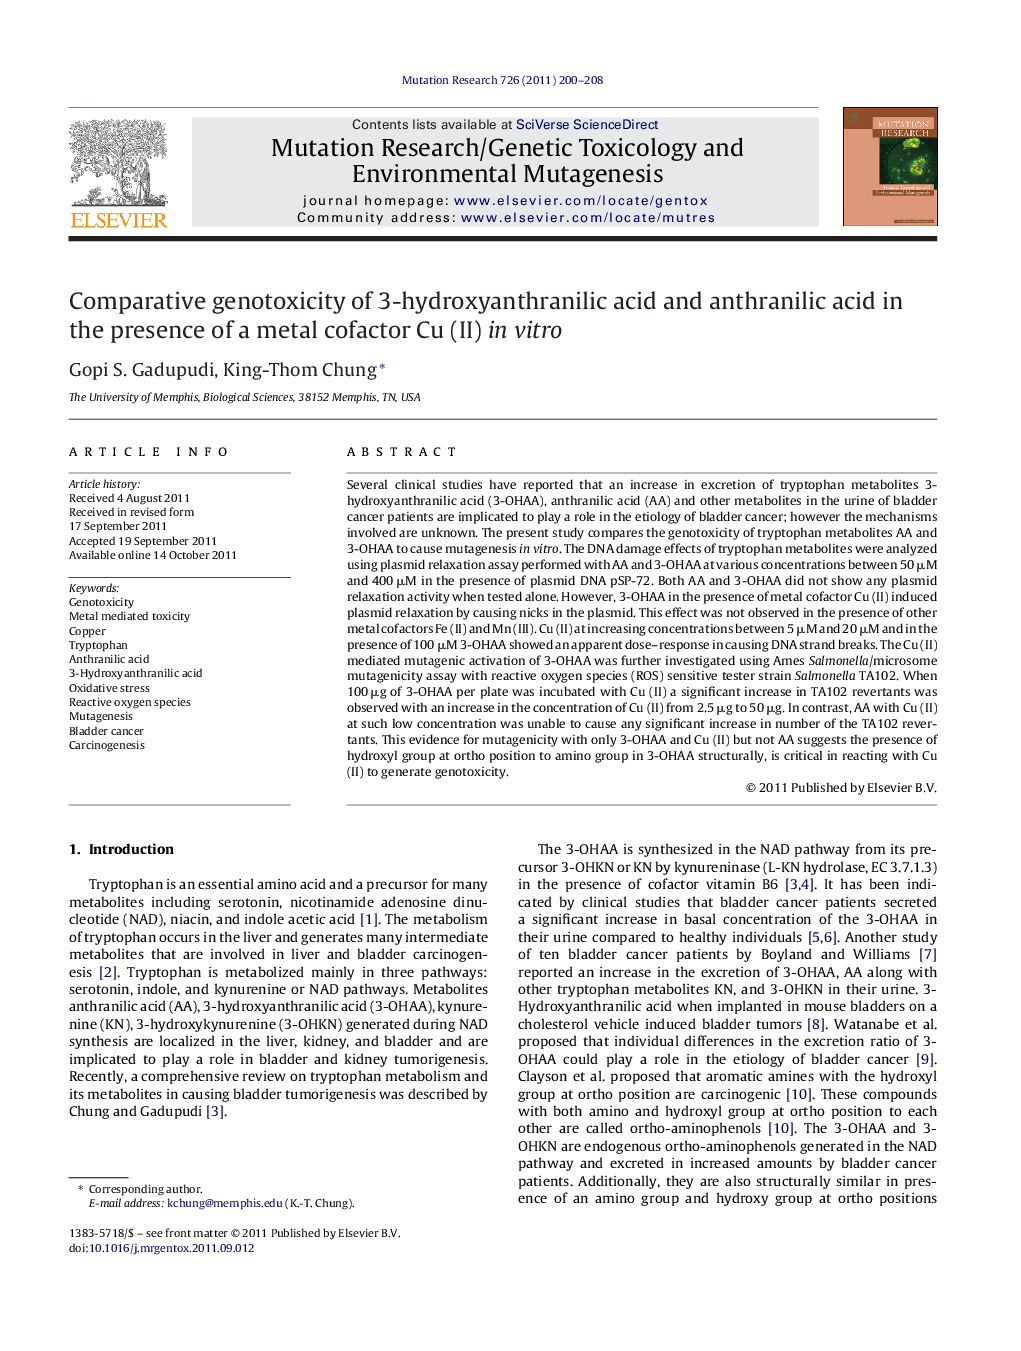 Comparative genotoxicity of 3-hydroxyanthranilic acid and anthranilic acid in the presence of a metal cofactor Cu (II) in vitro